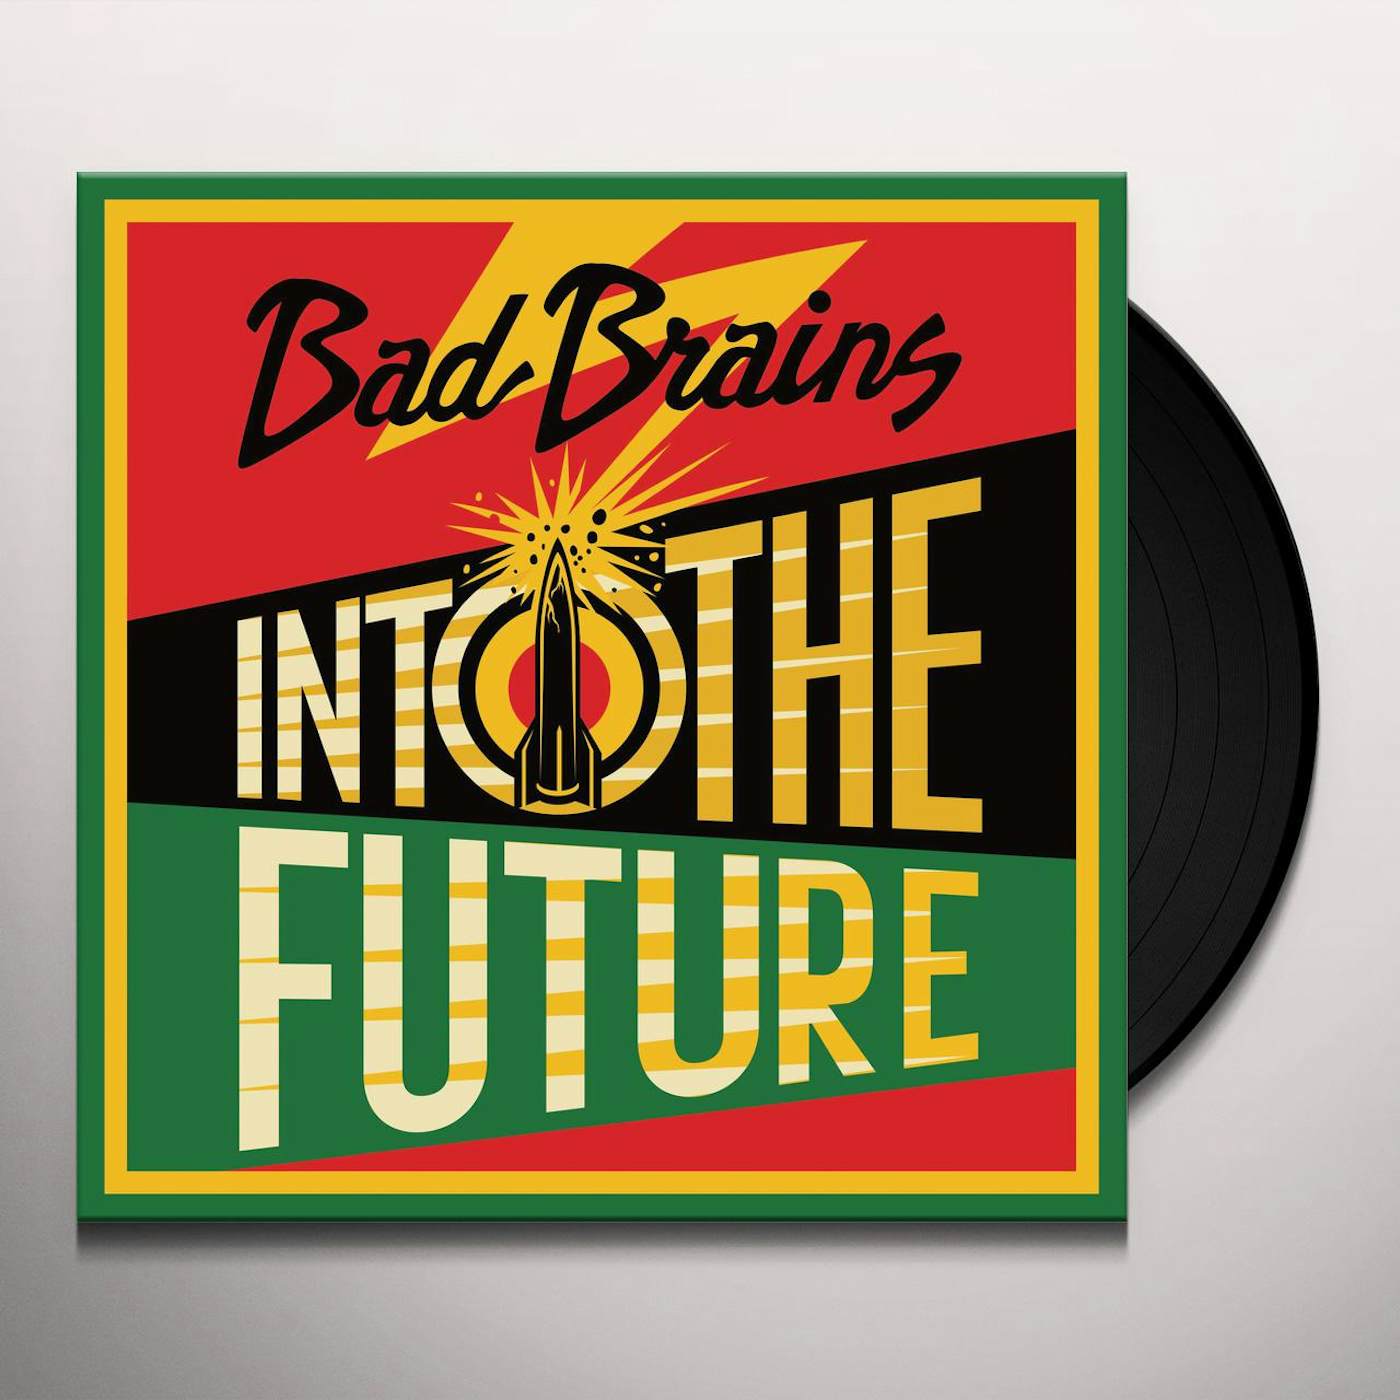 Bad Brains: Bad Brains (Black & Yellow Colored Vinyl) Vinyl LP —